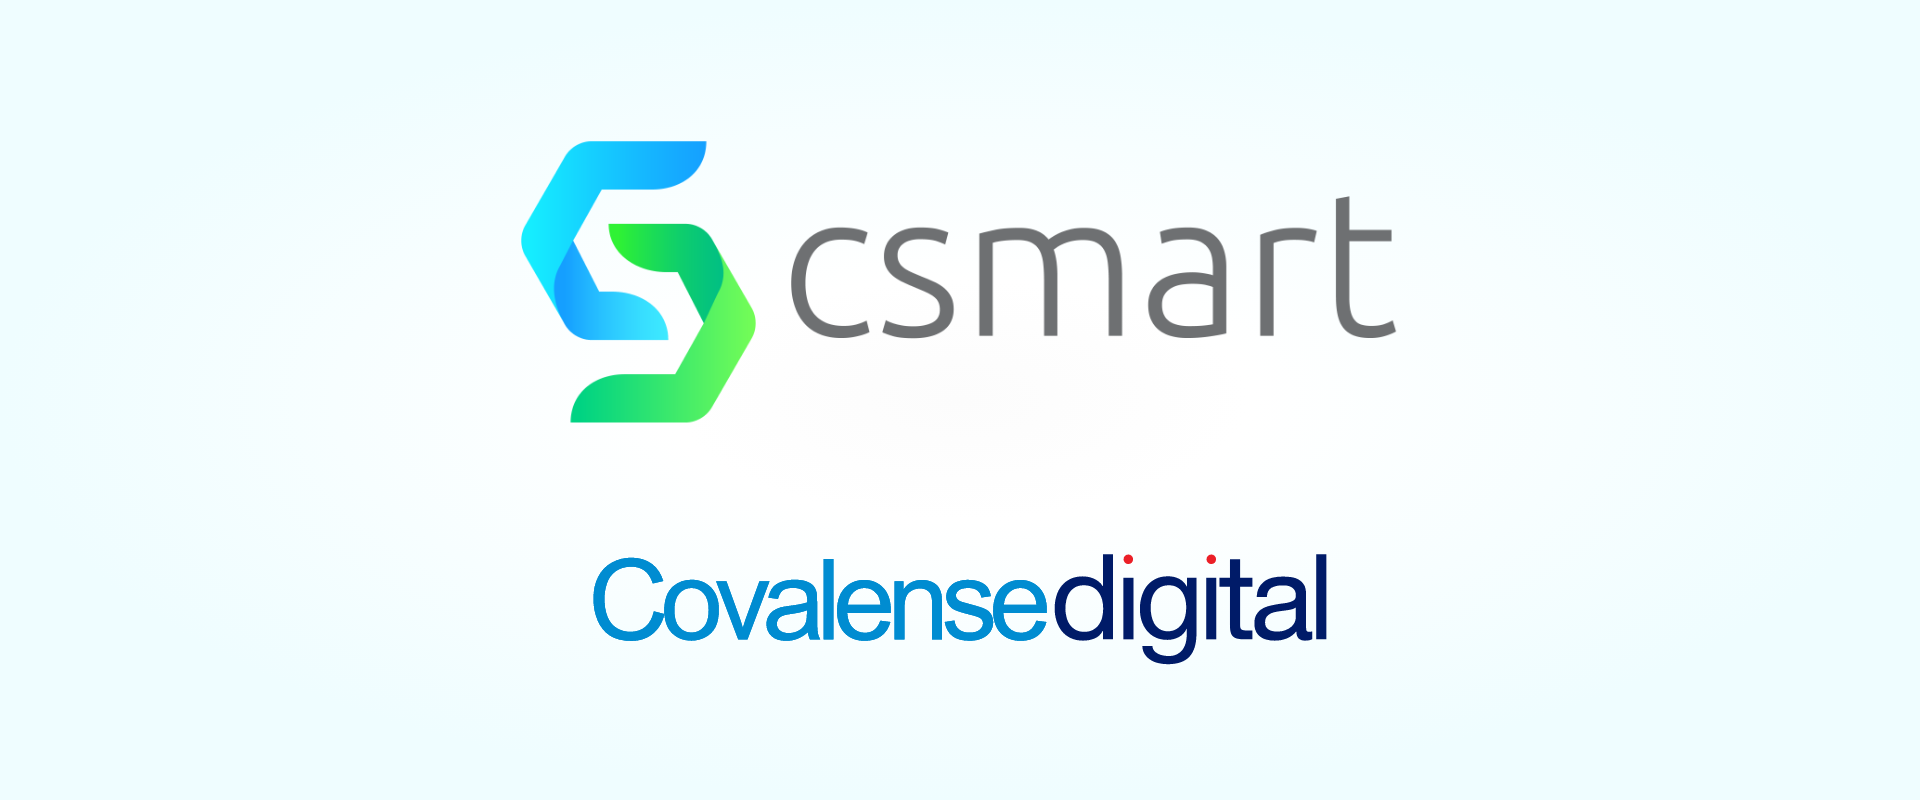 Covalensedigital launched Csmart - SaaS based subscription monetization solution